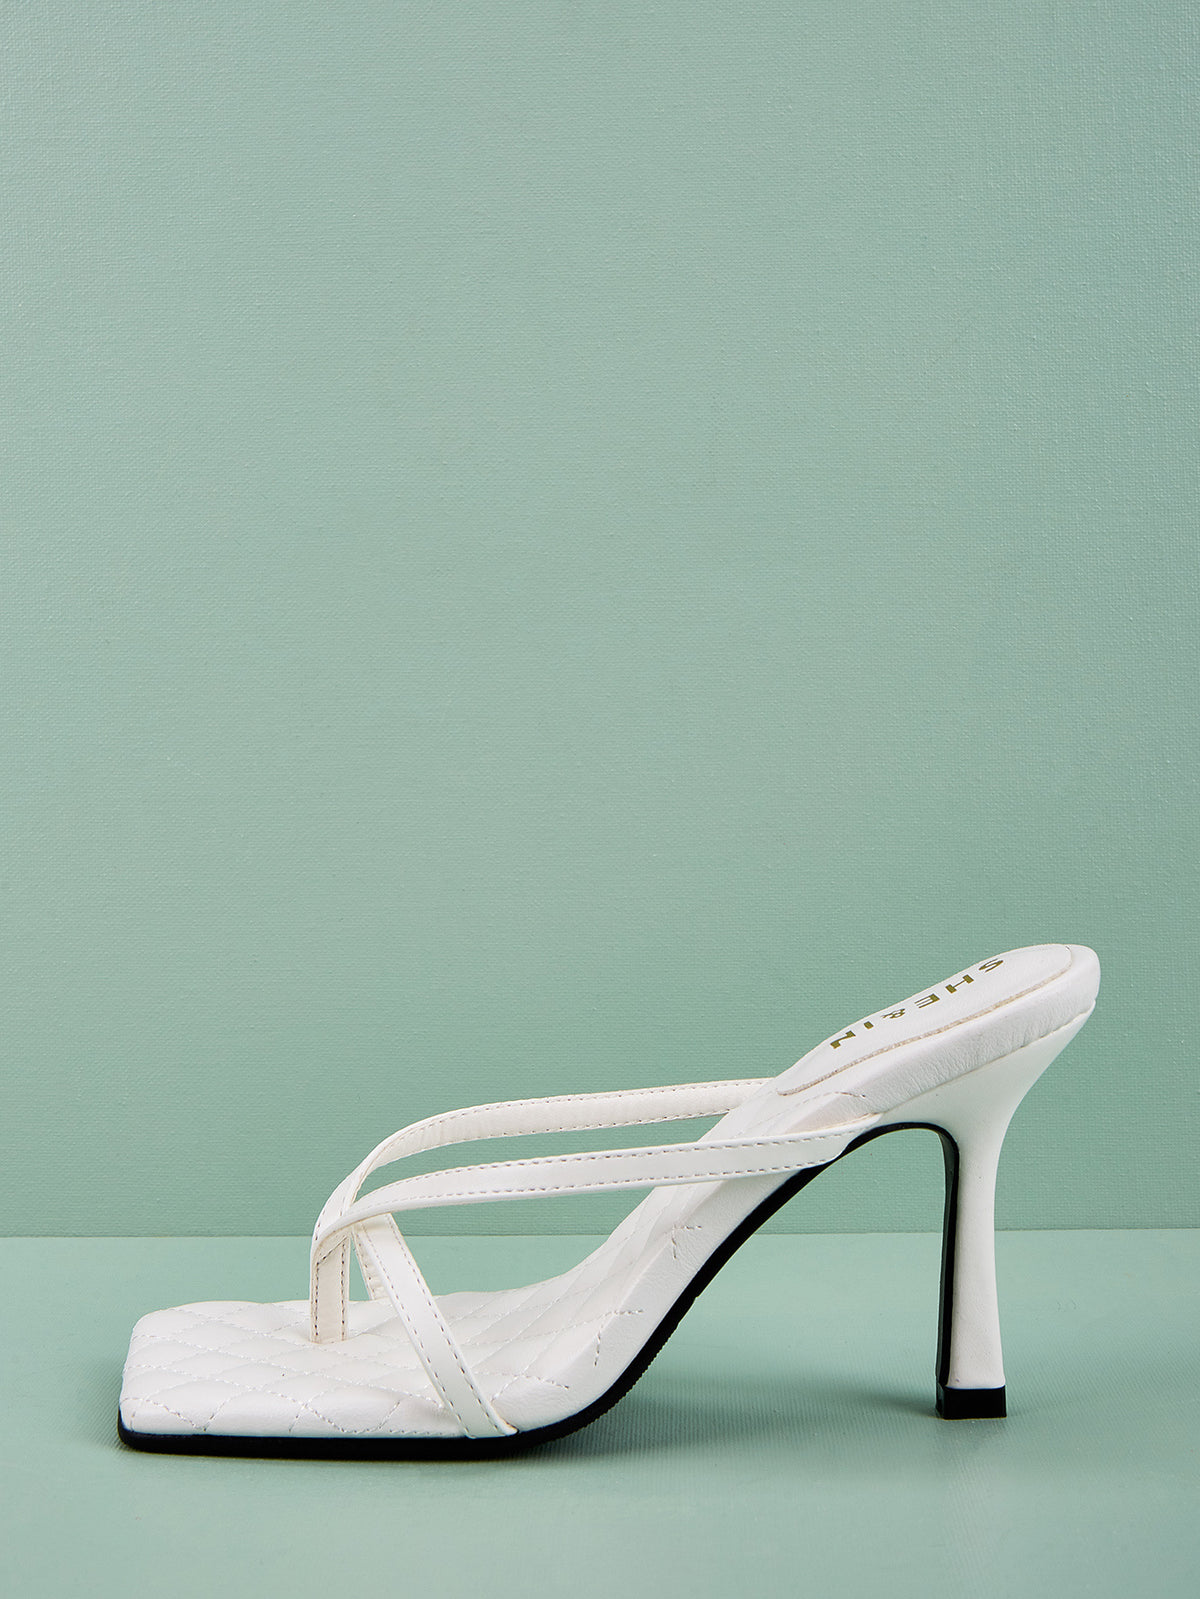 Plus Size Stiletto Heels - runwayfashionista.com